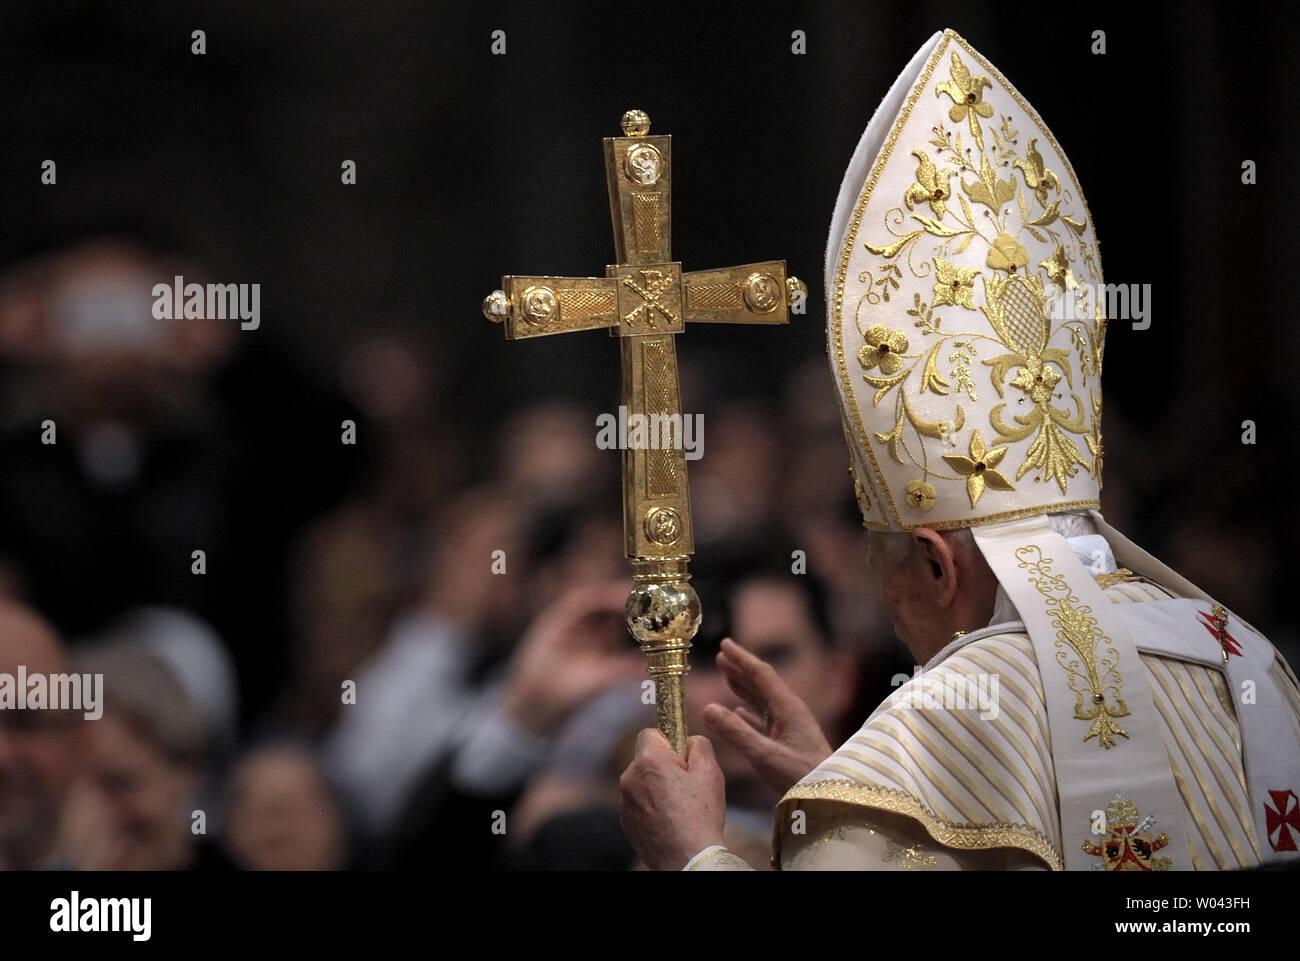 Pope Benedict XVI celebrates the midnight Christmas mass at St. Peter's Basilica in Vatican City on December 24, 2012.    UPI/Stefano Spazani Stock Photo